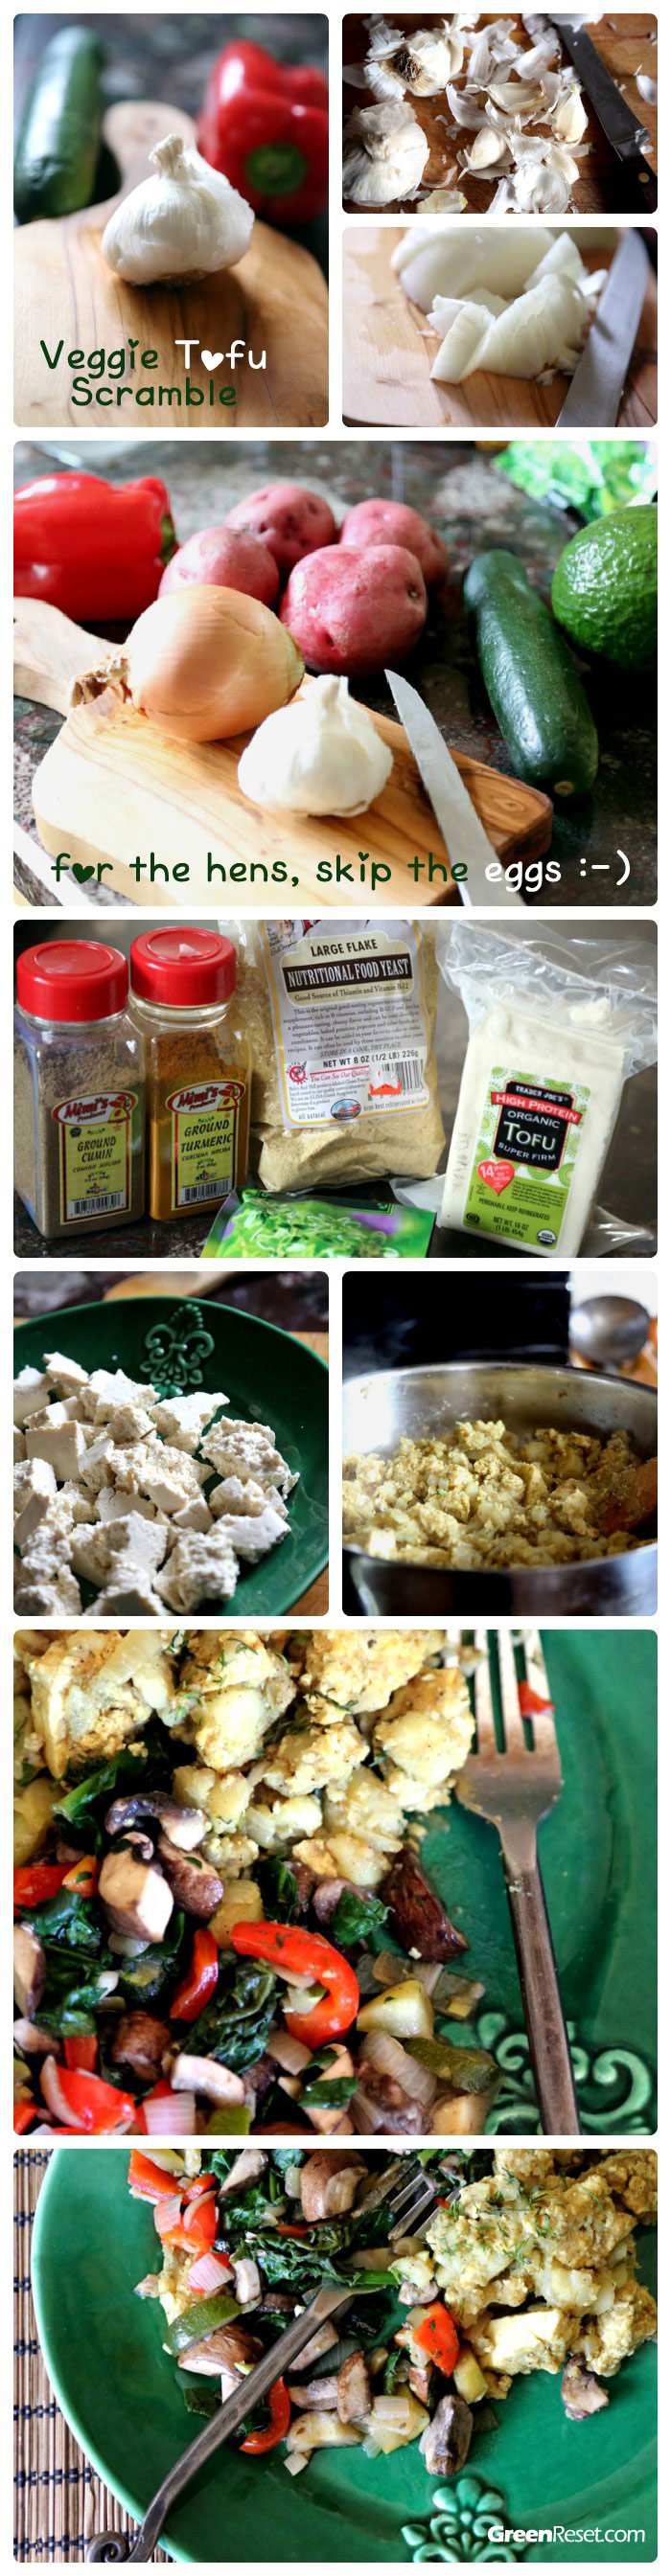 Making tofu scramble